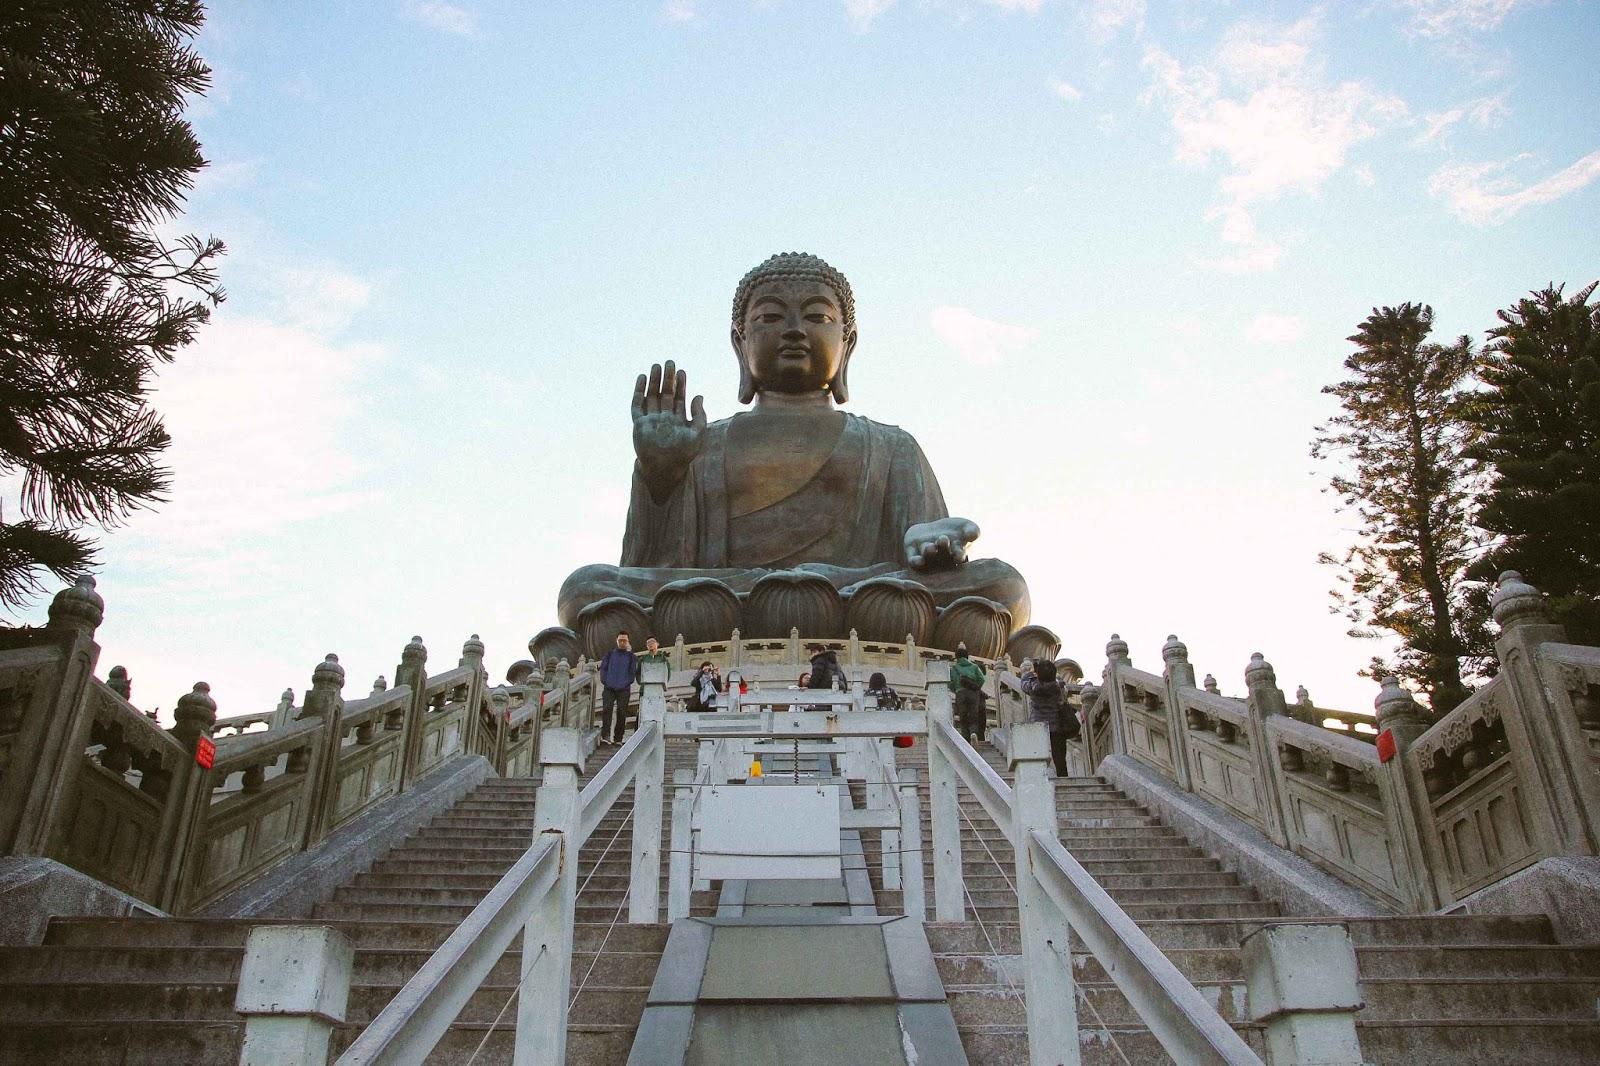 Cover image of this place Tian Tan Buddha (Big Buddha)